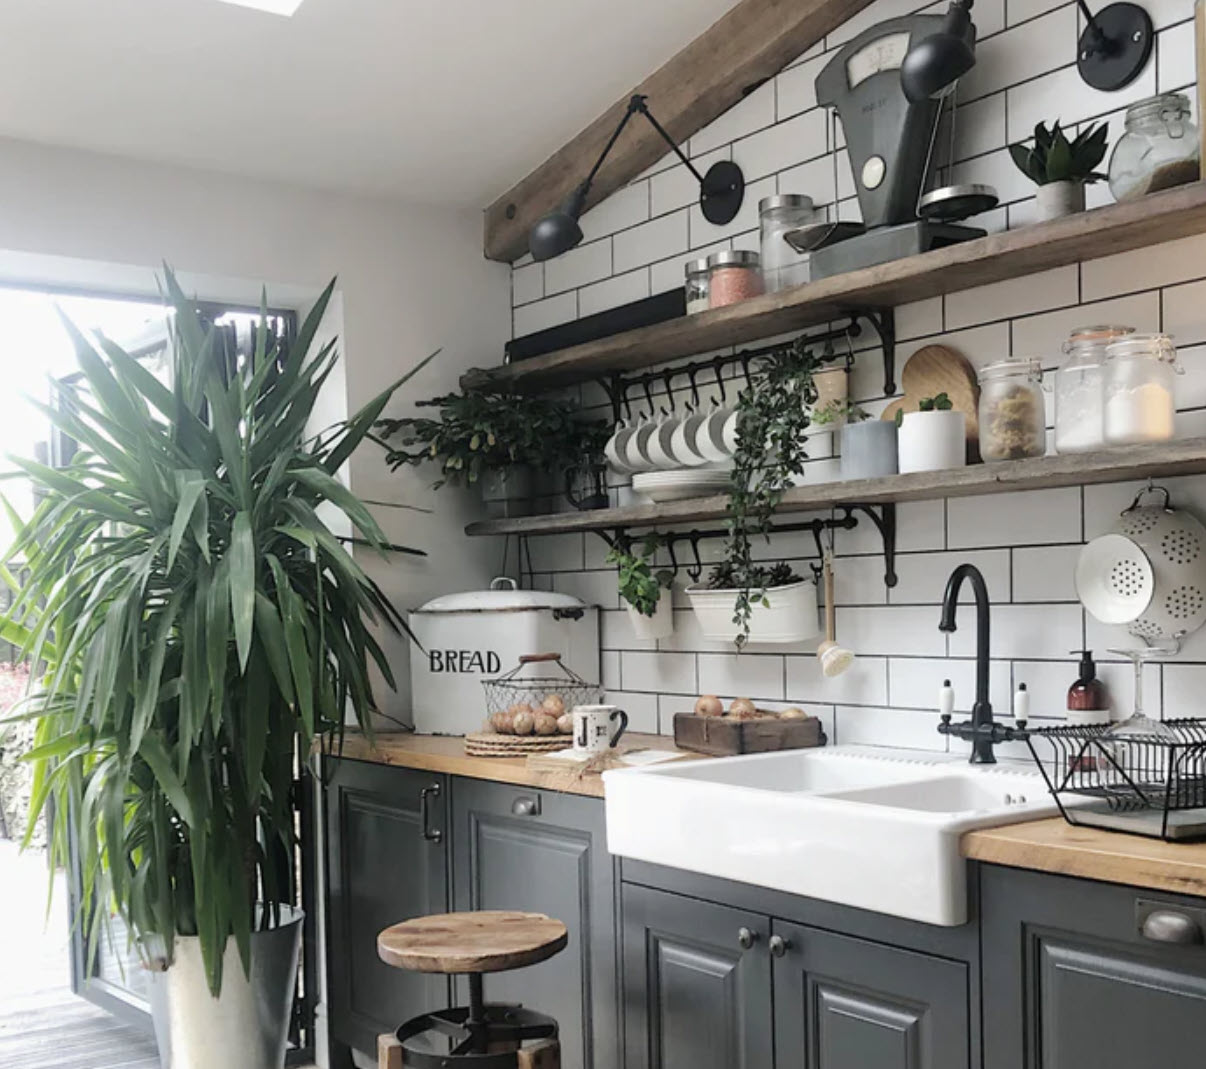 2023 Kitchen Design Ideas For Eco-Friendly Homes